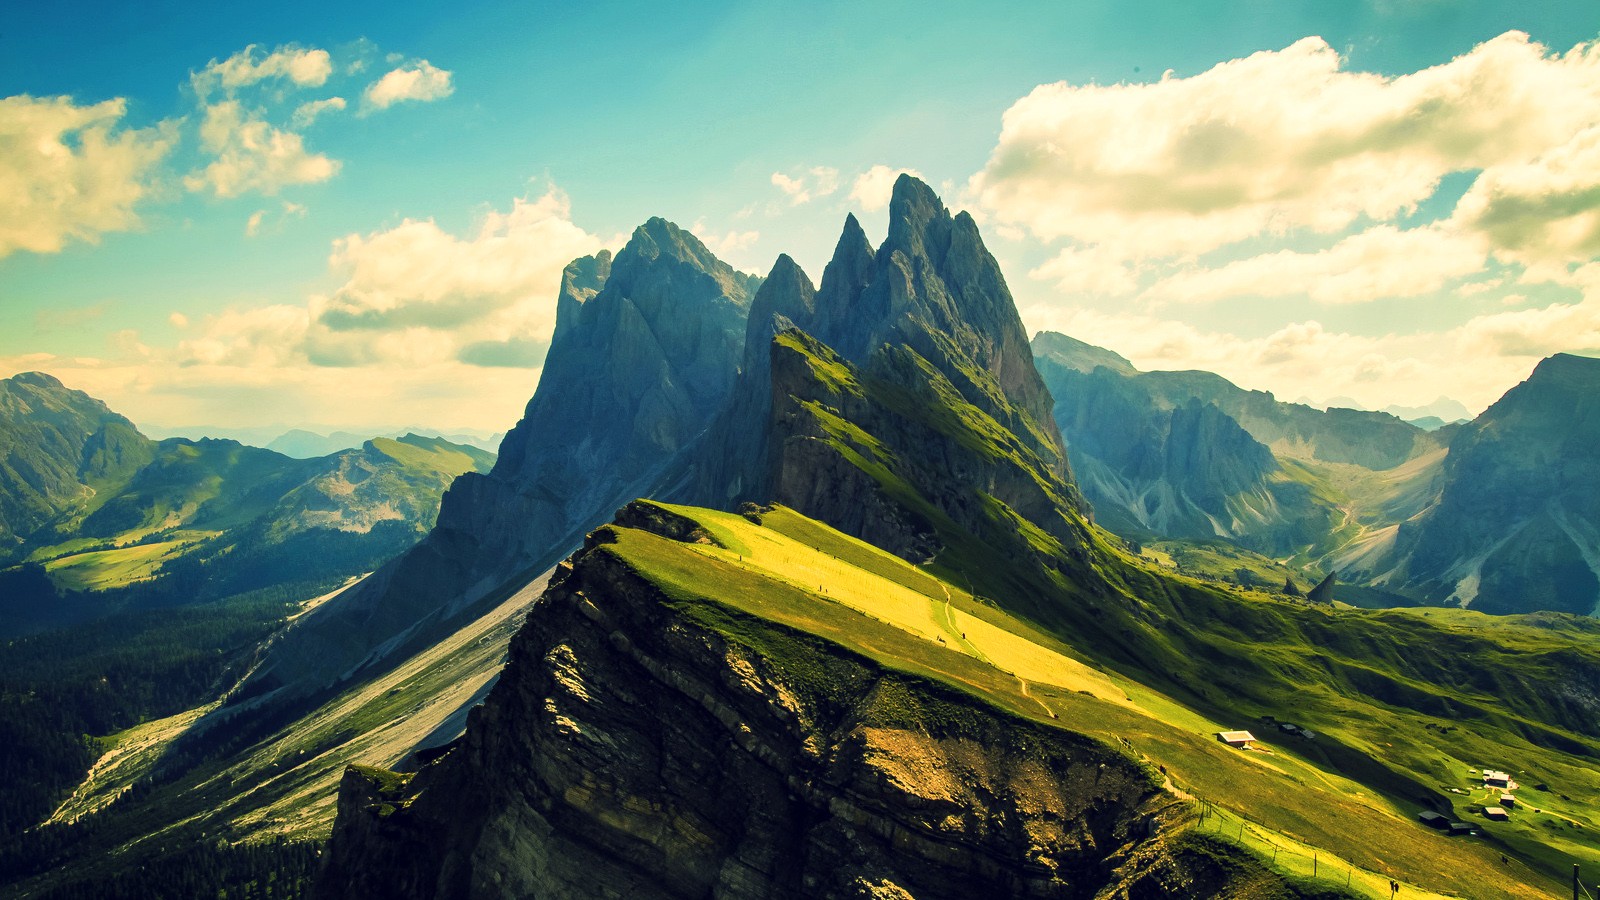 General 1600x900 nature hills landscape mountains ridges Dolomites green clouds sky rocks photography